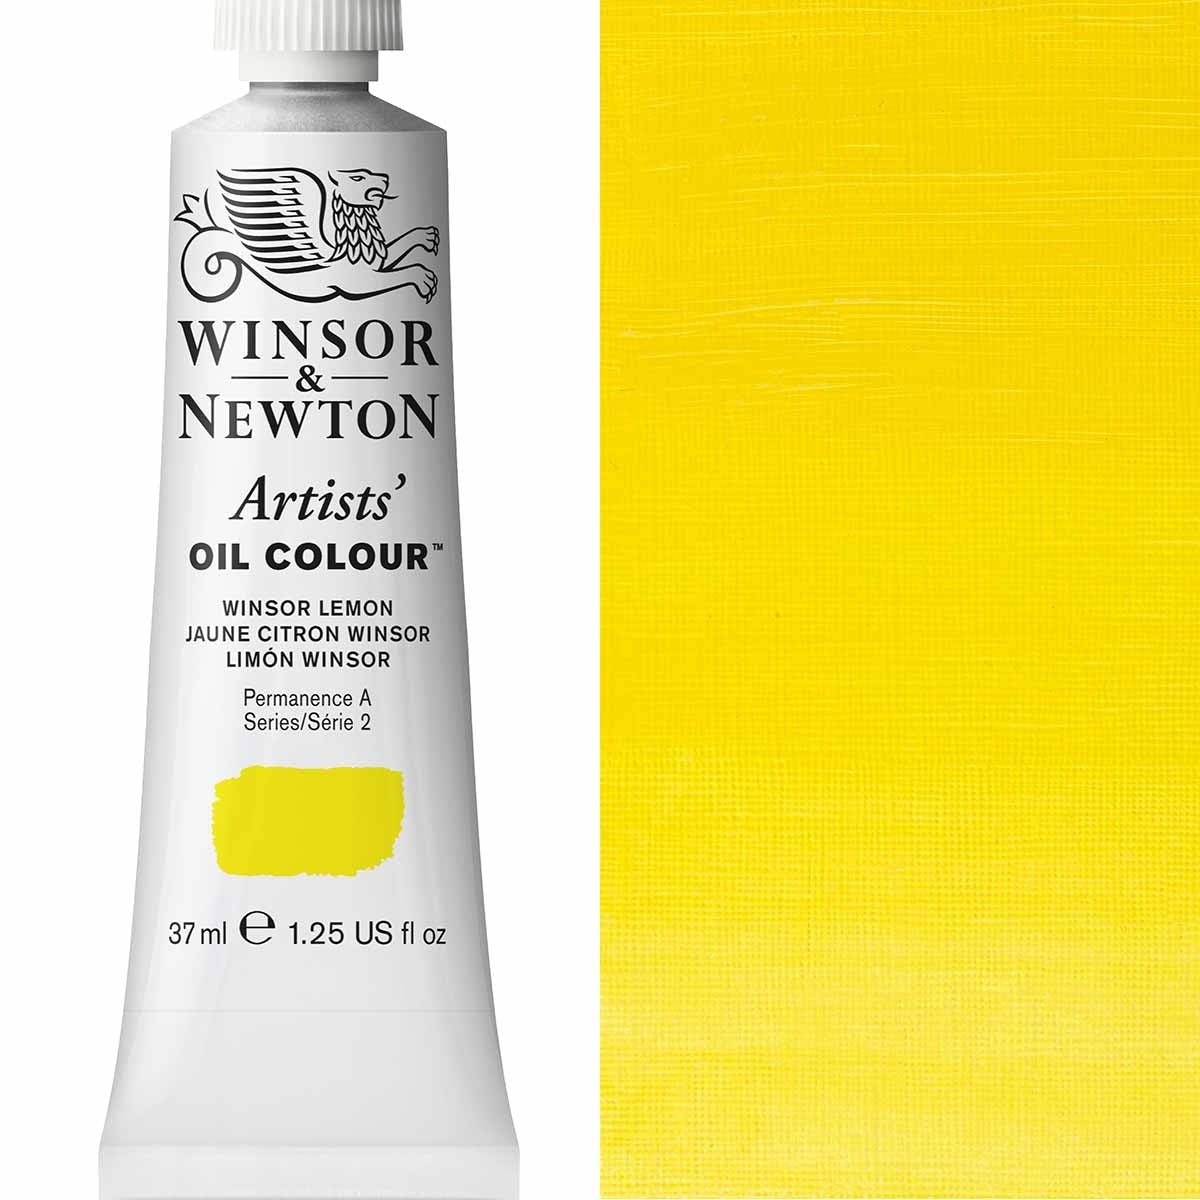 Winsor and Newton - Artists' Oil Colour - 37ml - Winsor Lemon